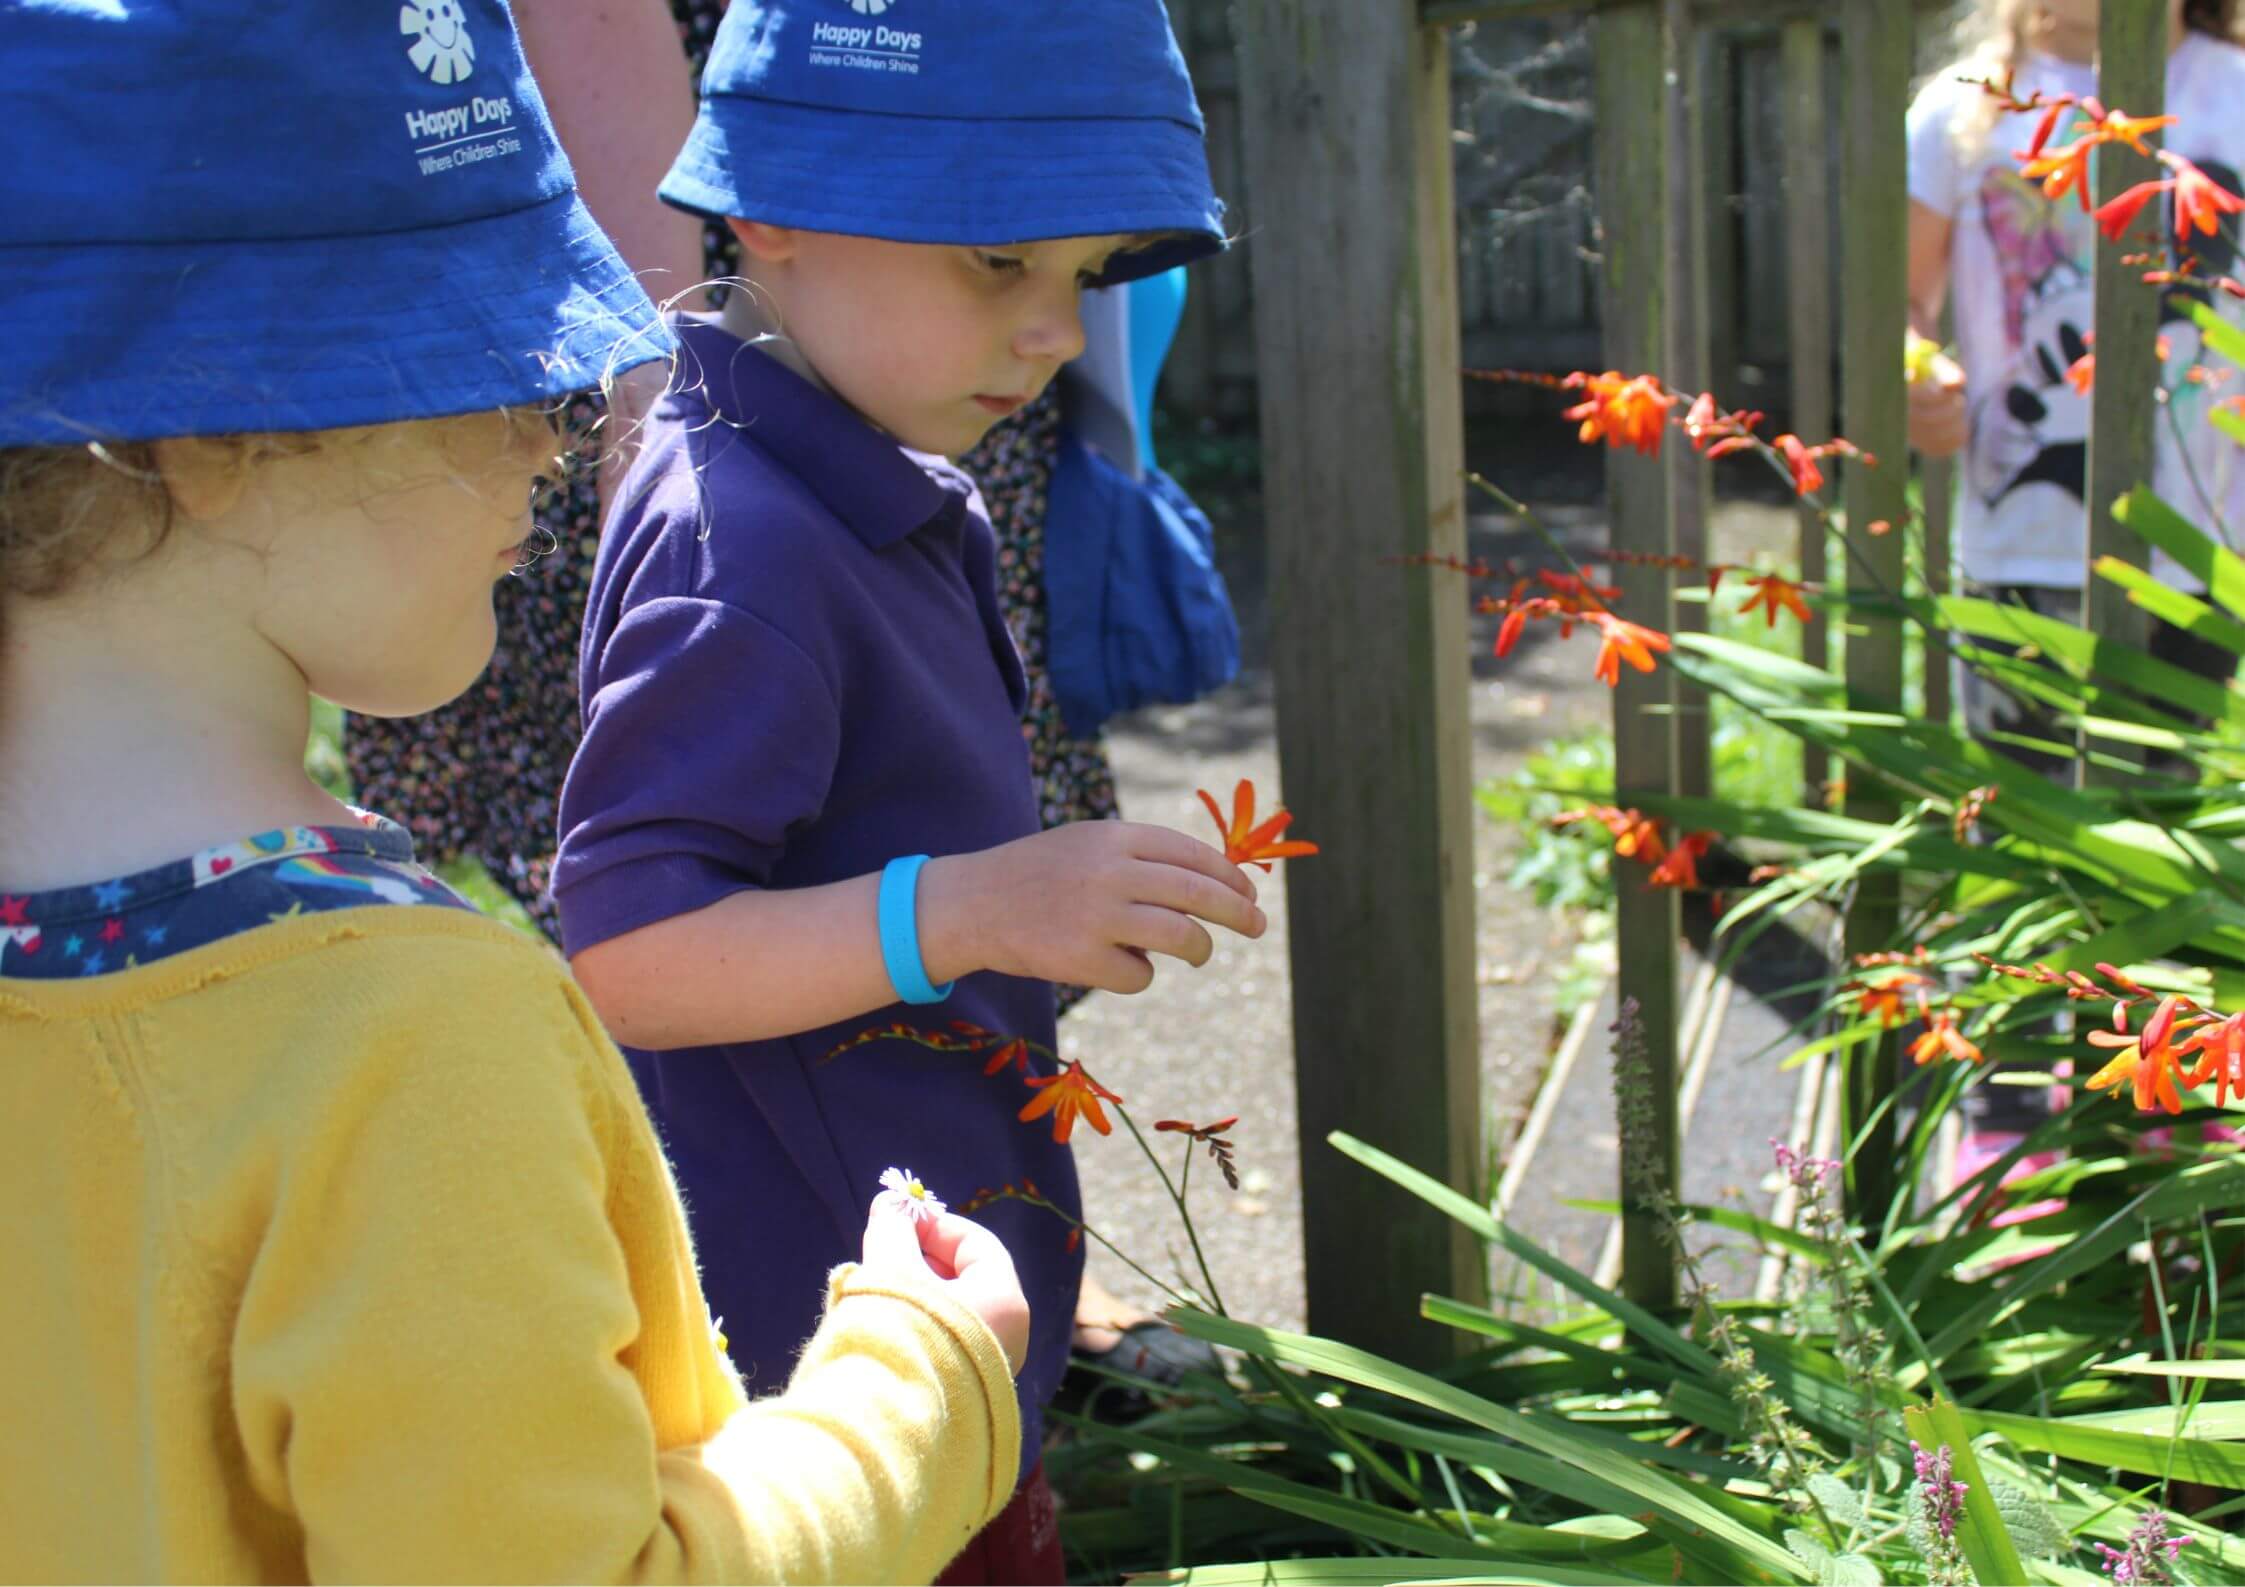 Children outdoors picking flowers